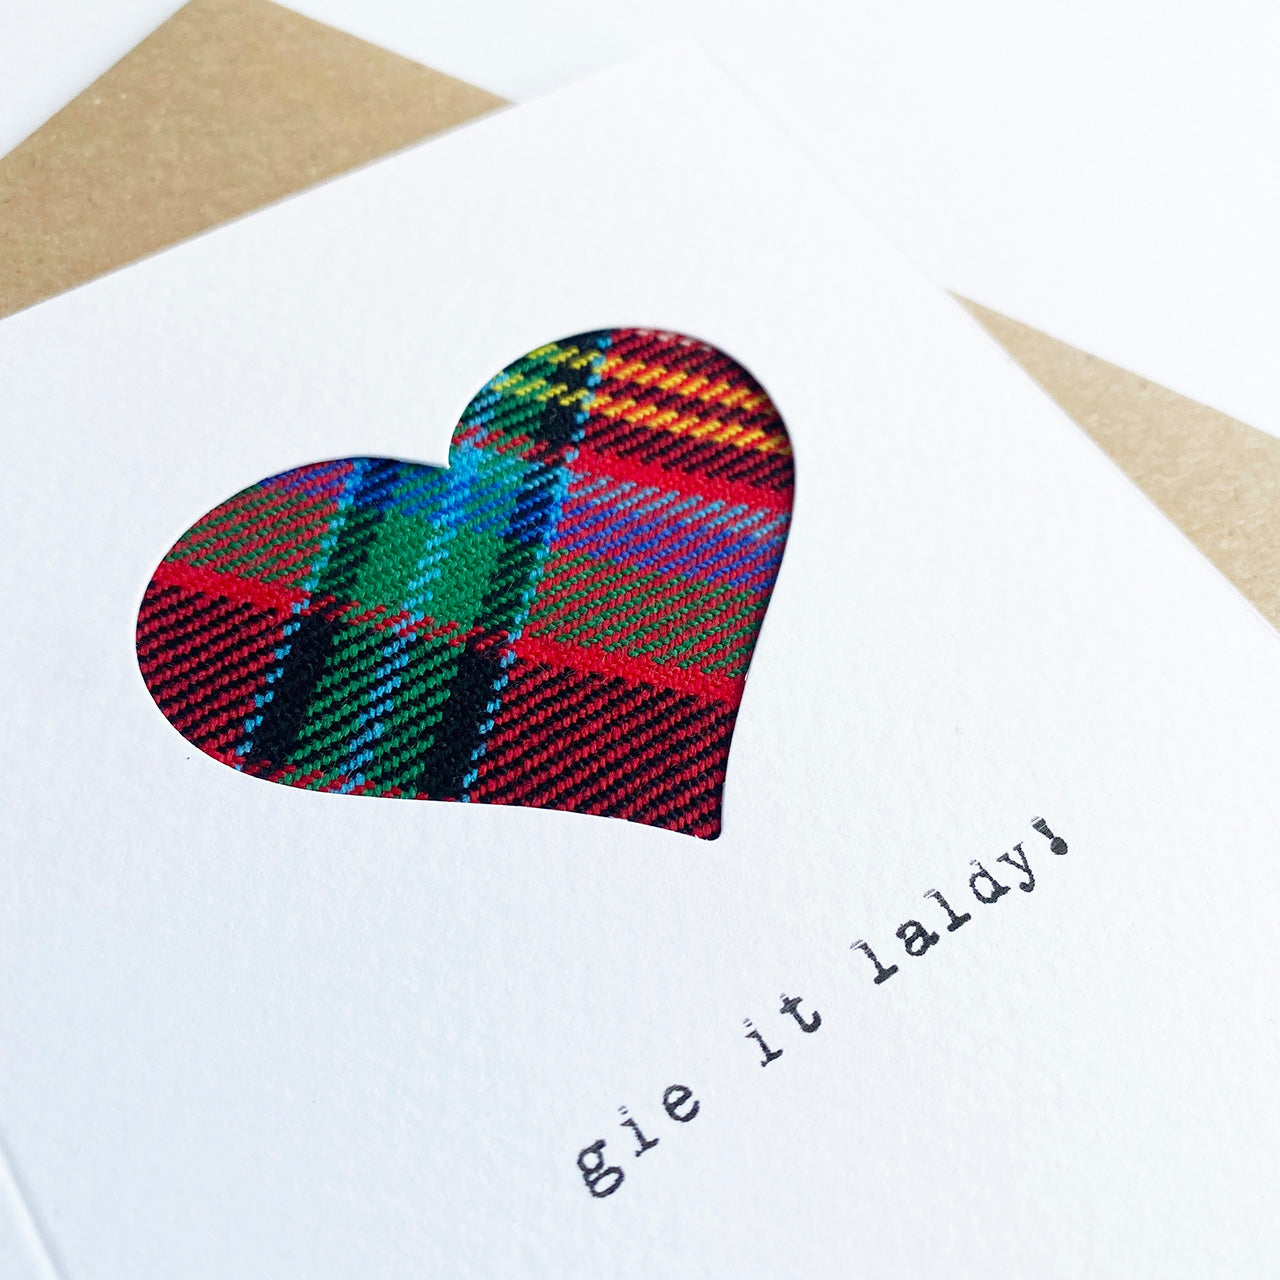 'Gie It Laldy!' Scottish Celebration Card with Real Tartan - HiyaPal